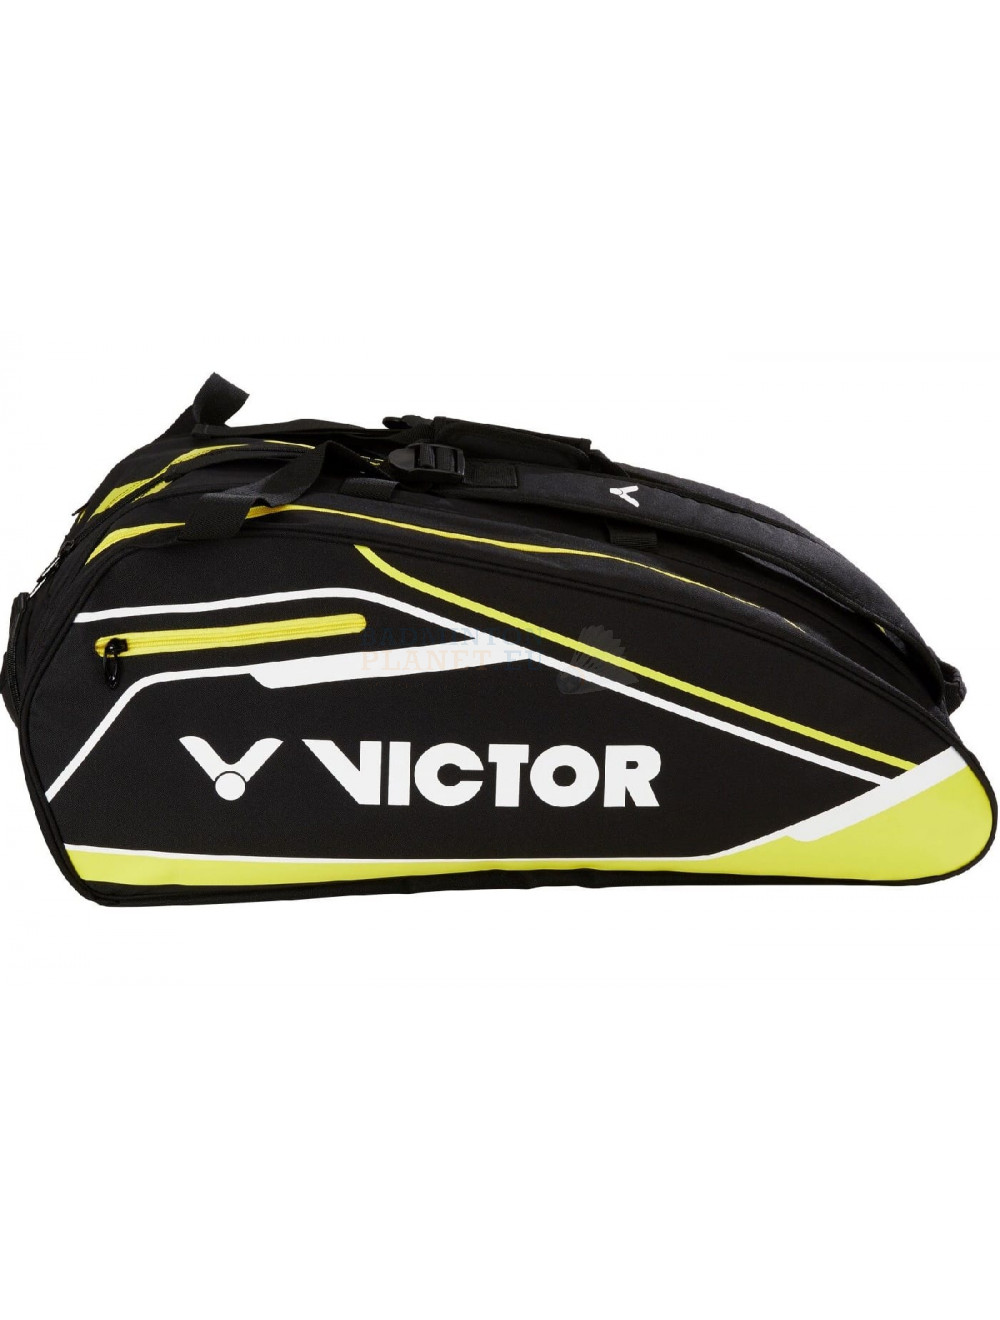 Victor Multithermobag 9039  Badminton Tasche 